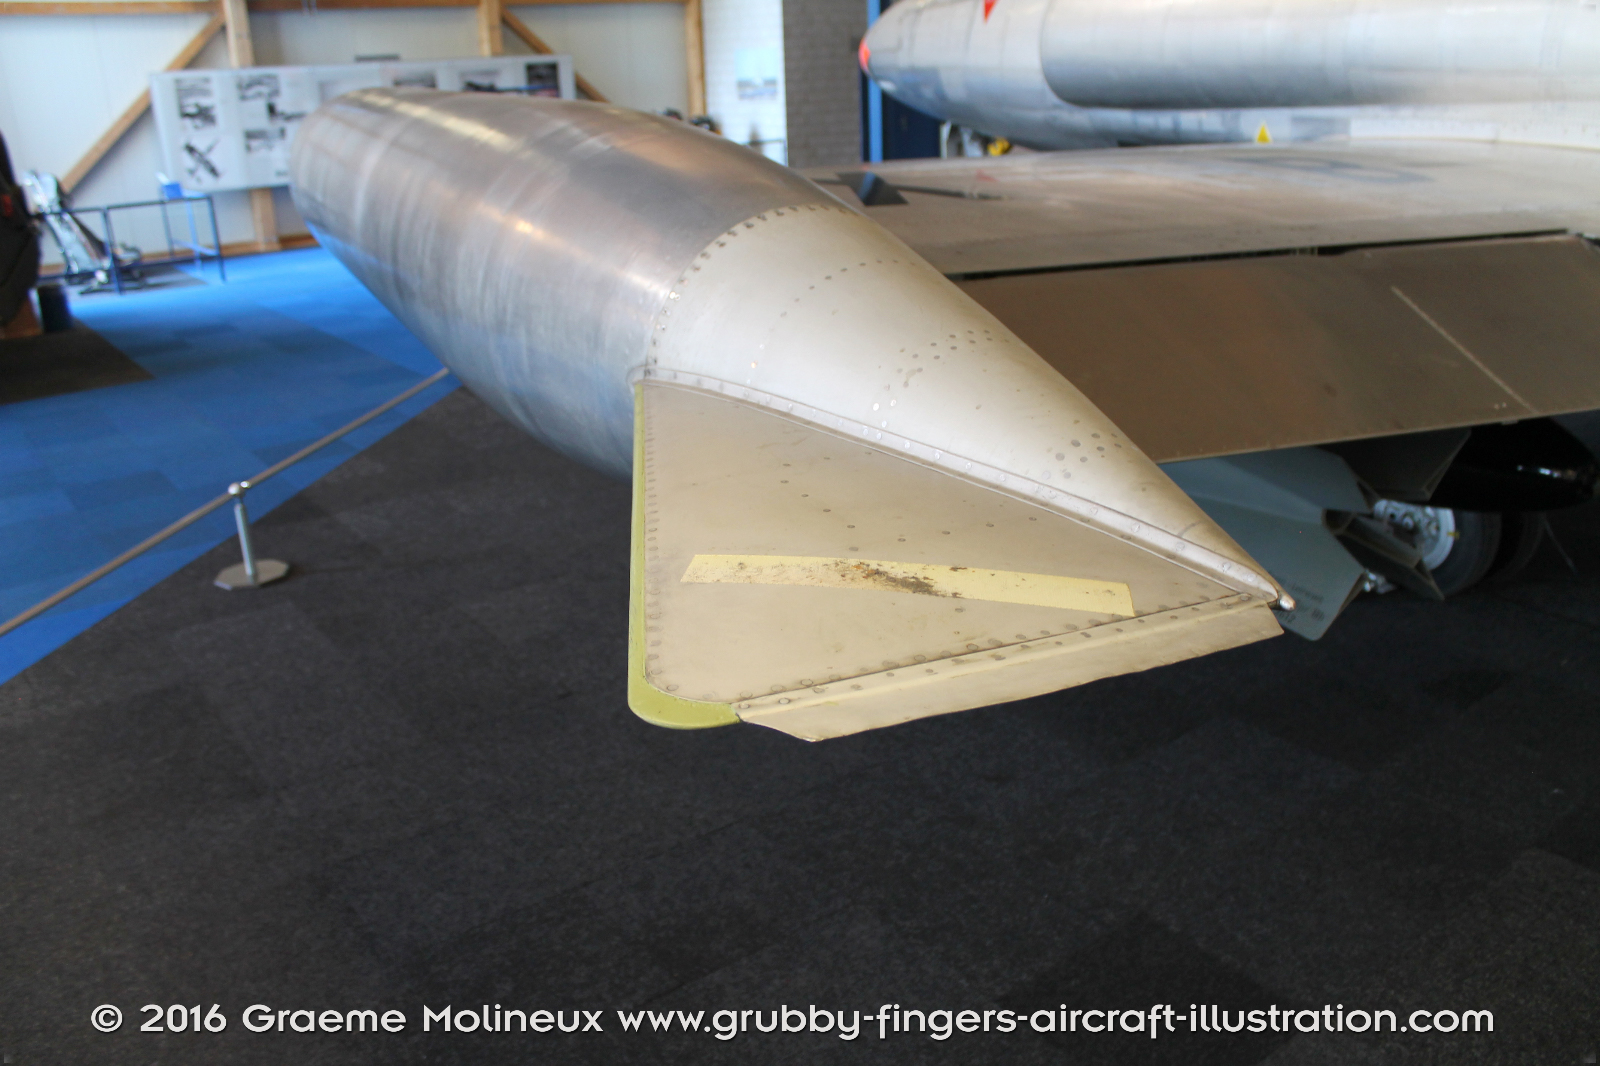 FFA_P-16_X-HB-VAD_Swiss_Air_Force_Museum_2015_53_GrubbyFingers